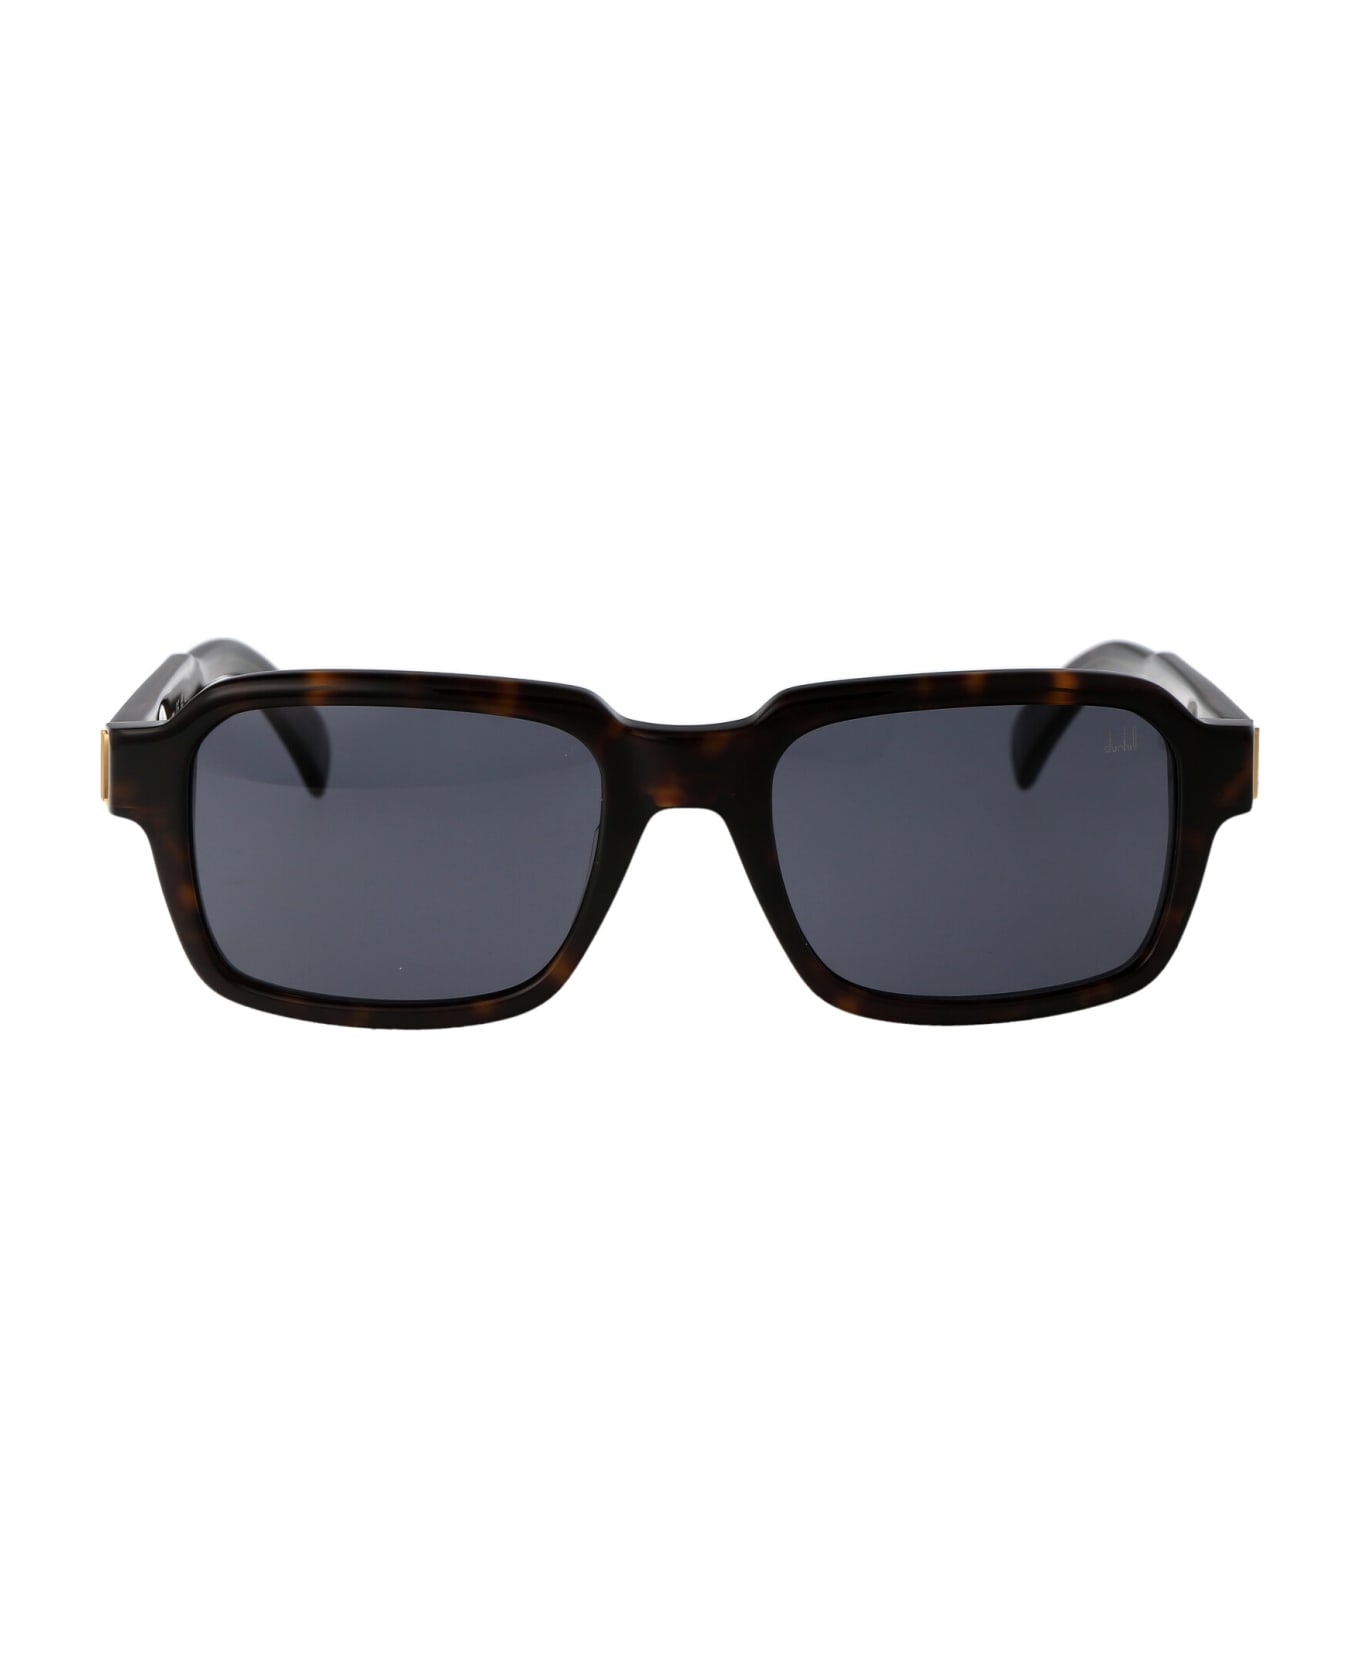 Dunhill Du0057s Sunglasses - 002 HAVANA HAVANA GREY サングラス